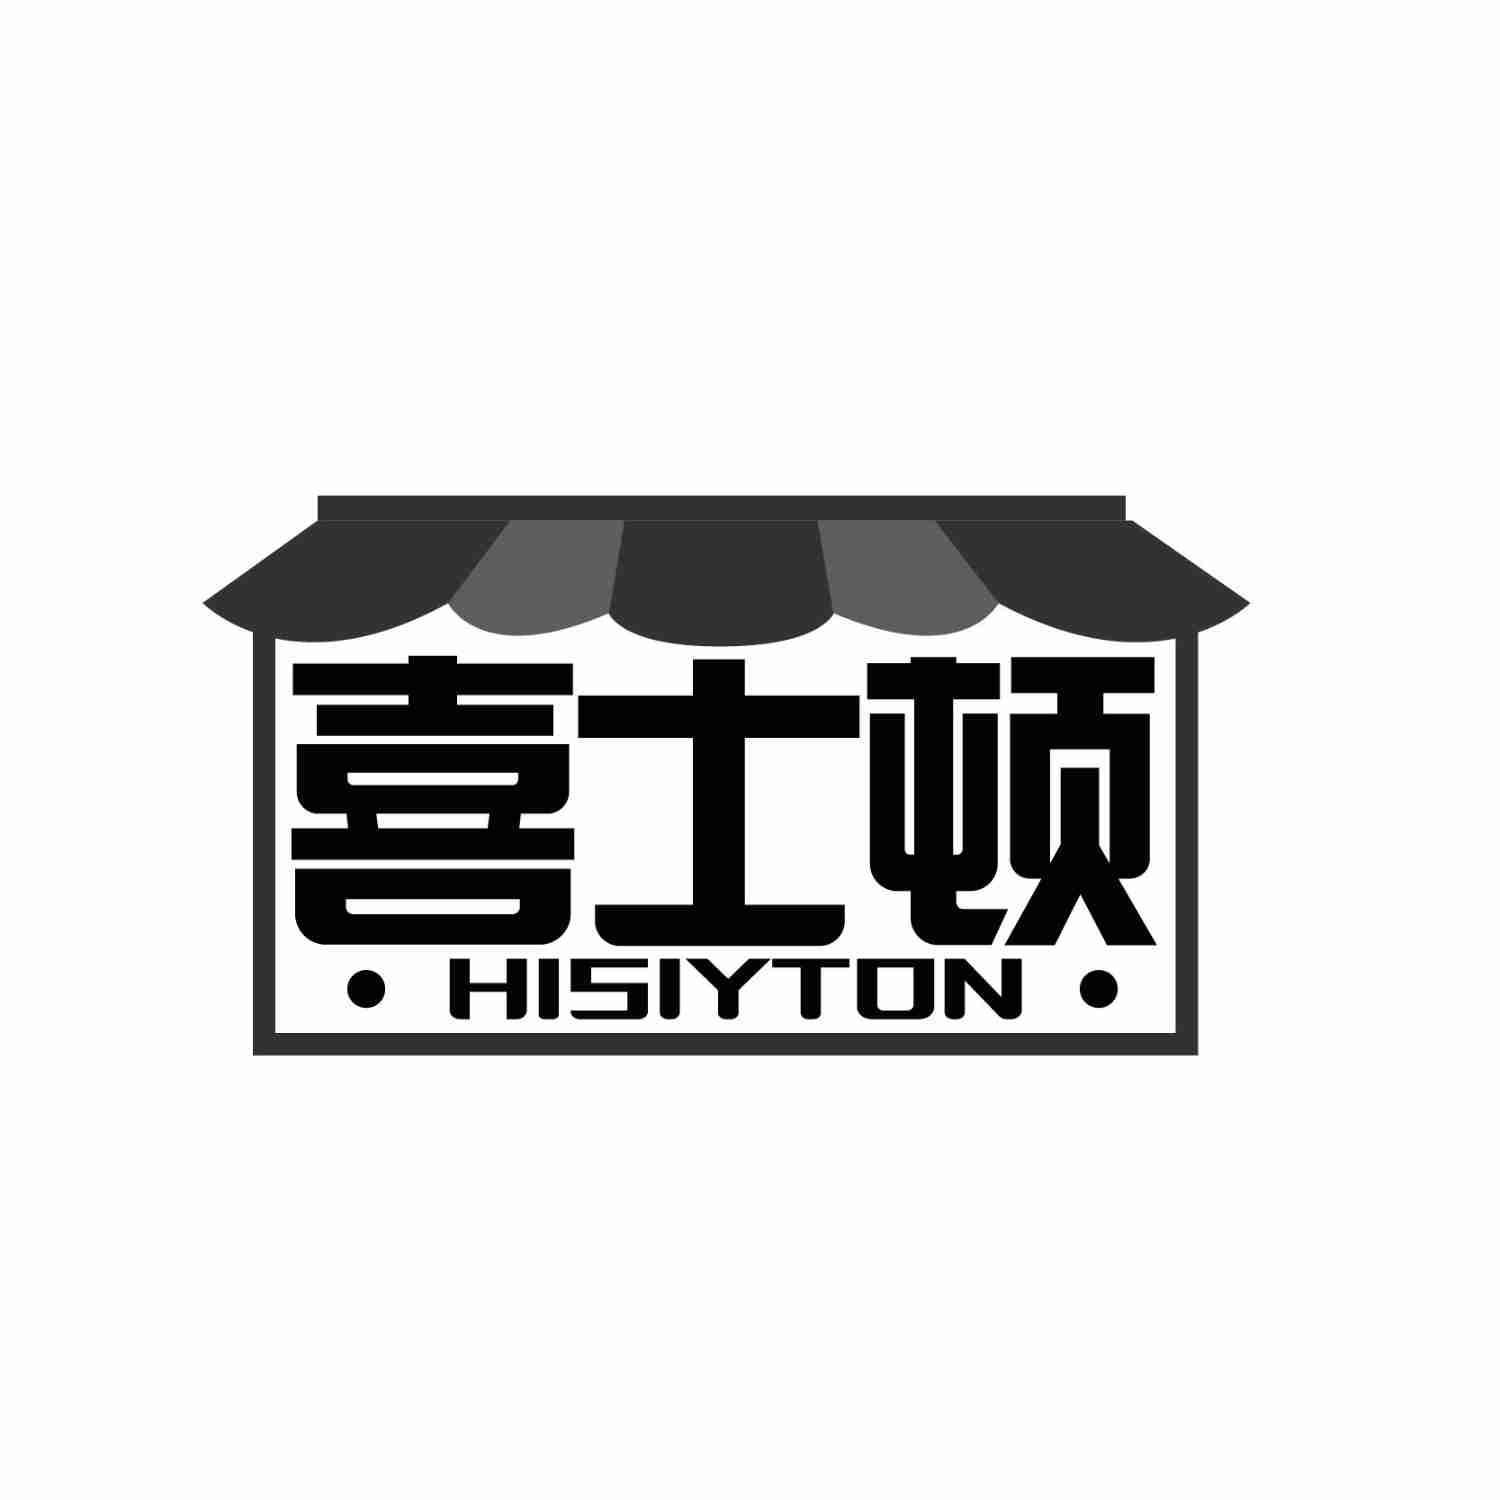 喜士顿 HISIYTON 商标公告